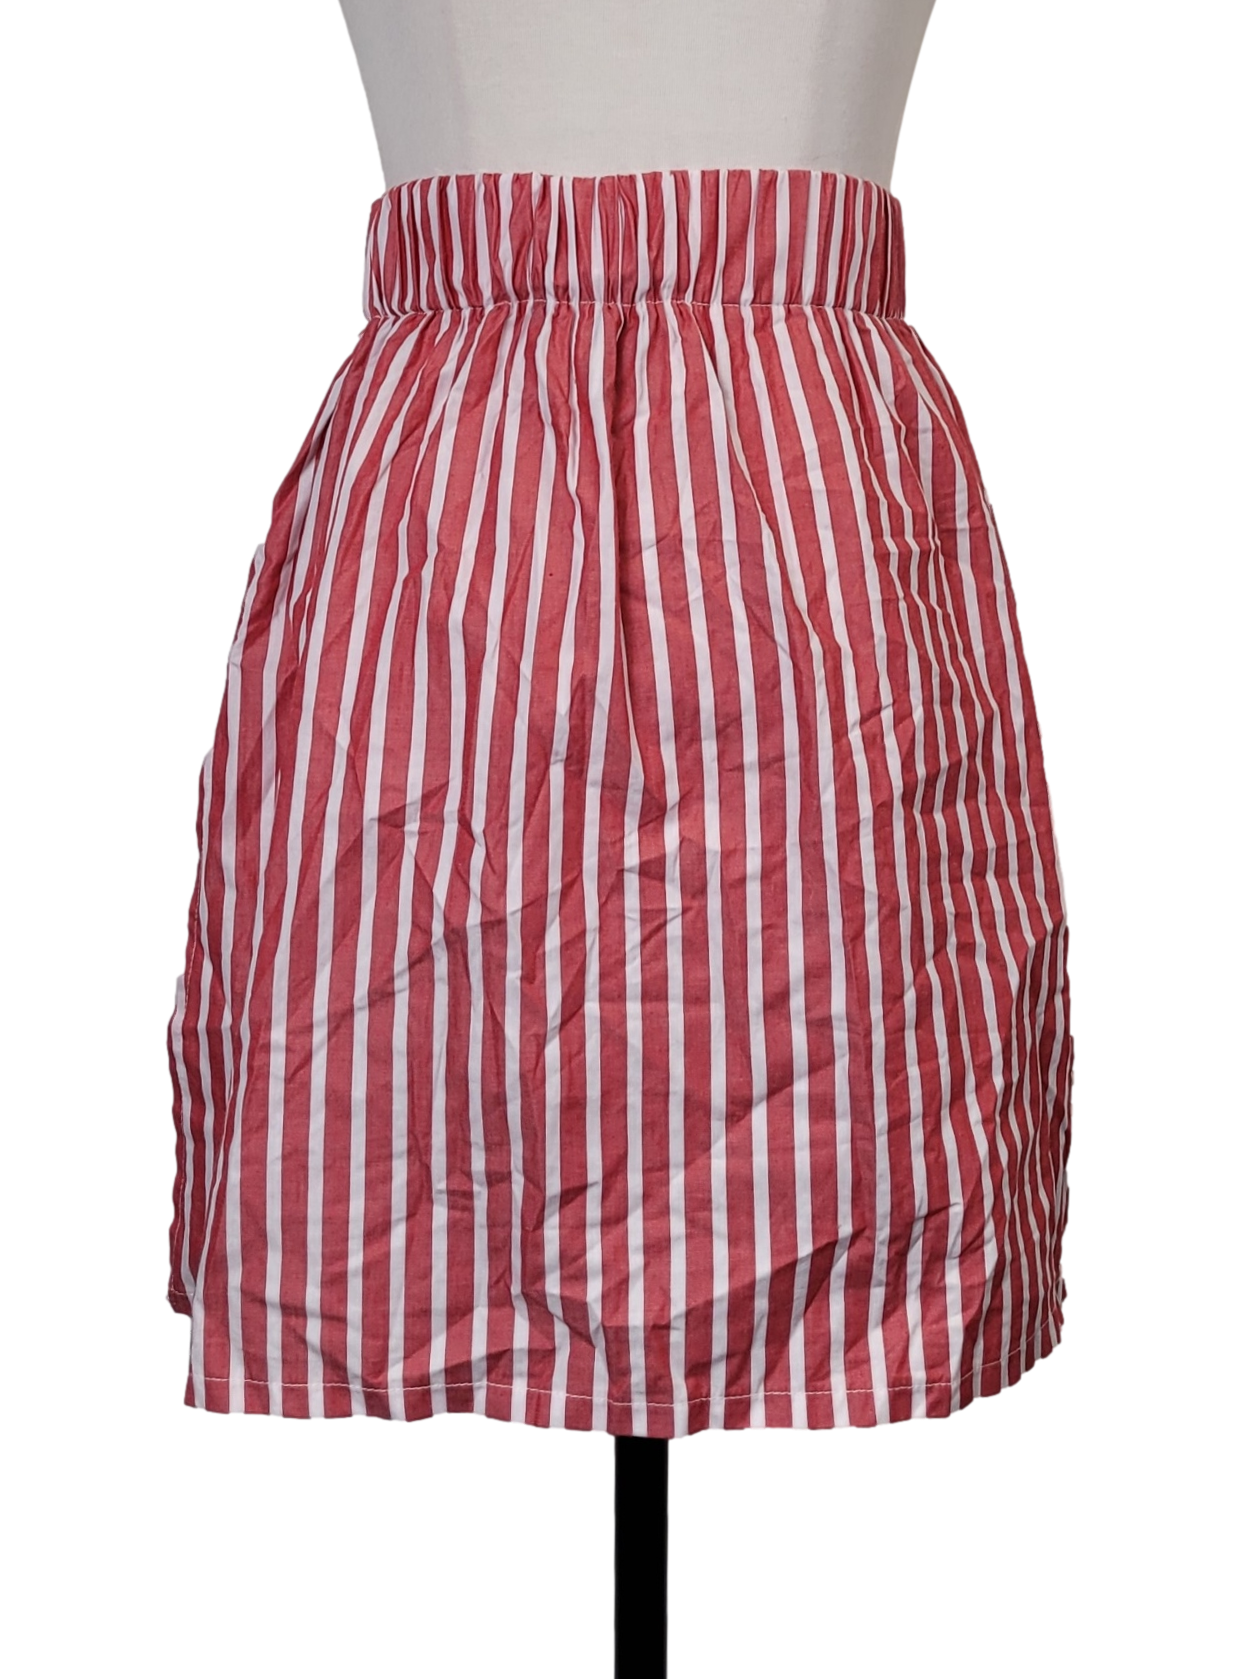 Strawberry Red Striped Skirt